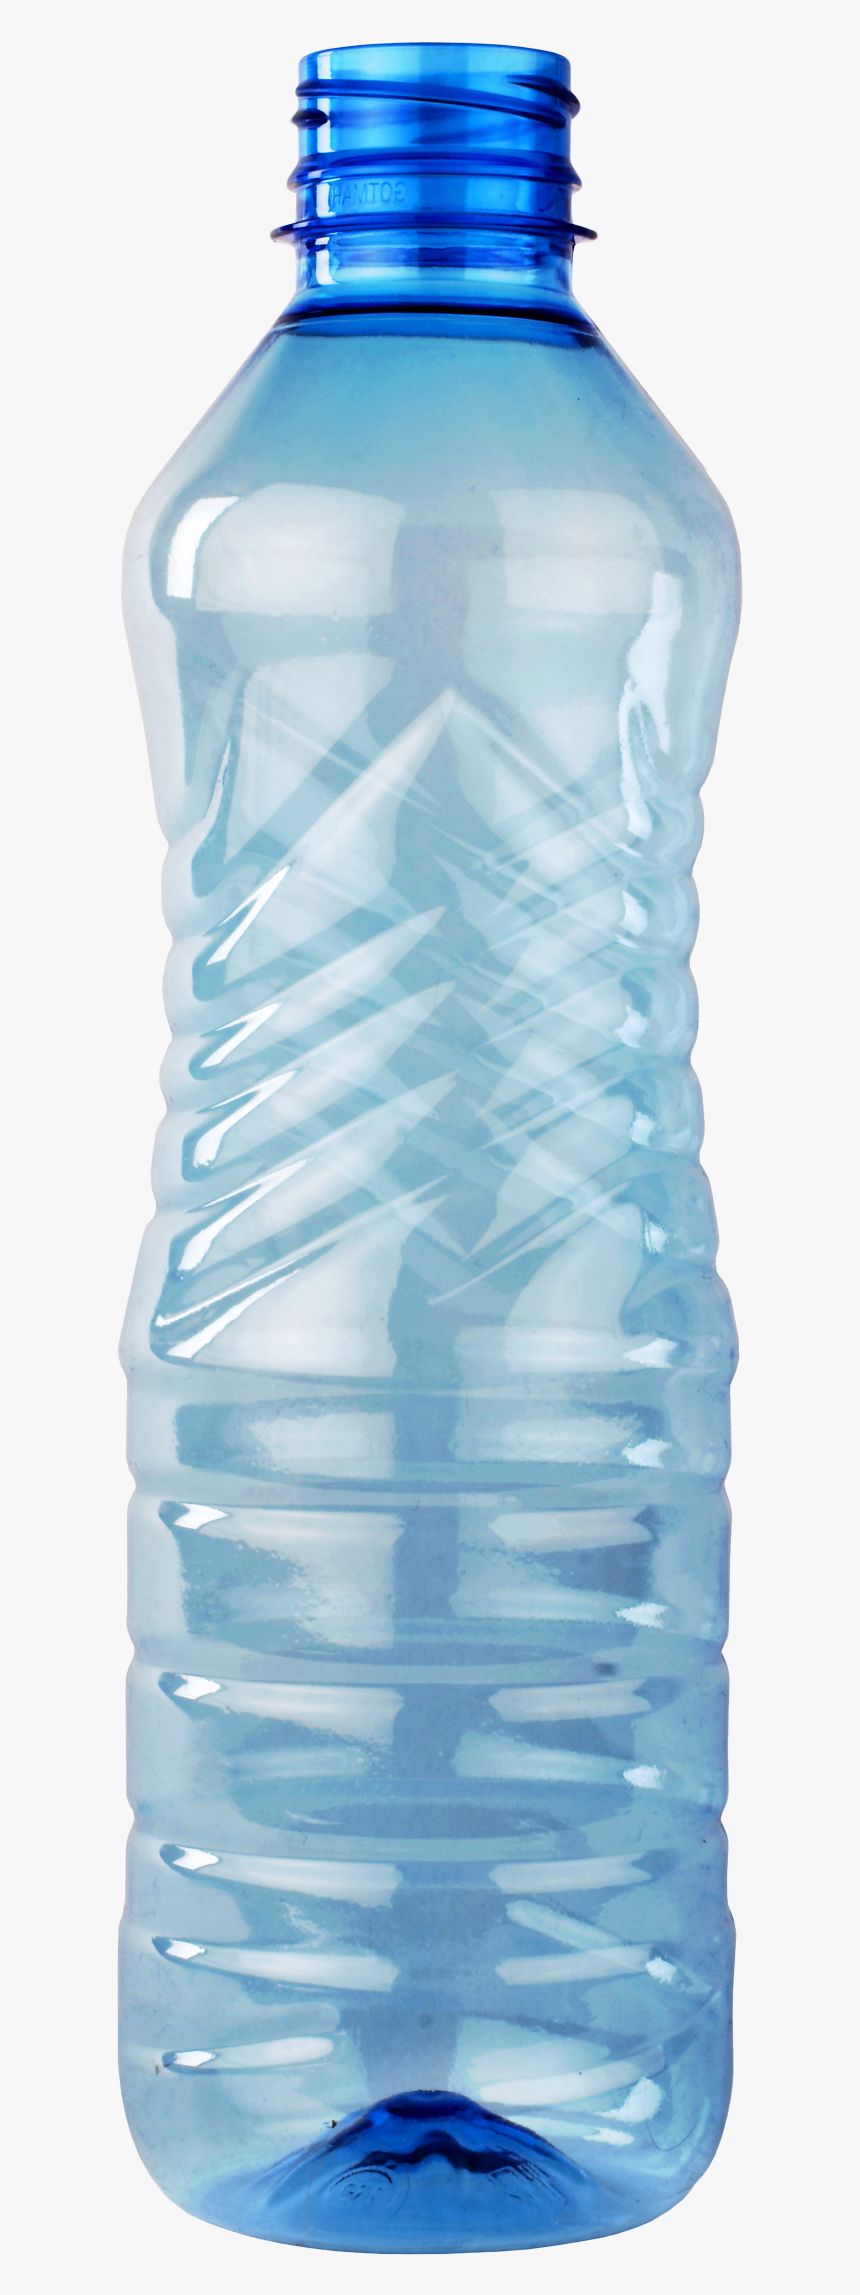 water bottle transparent background